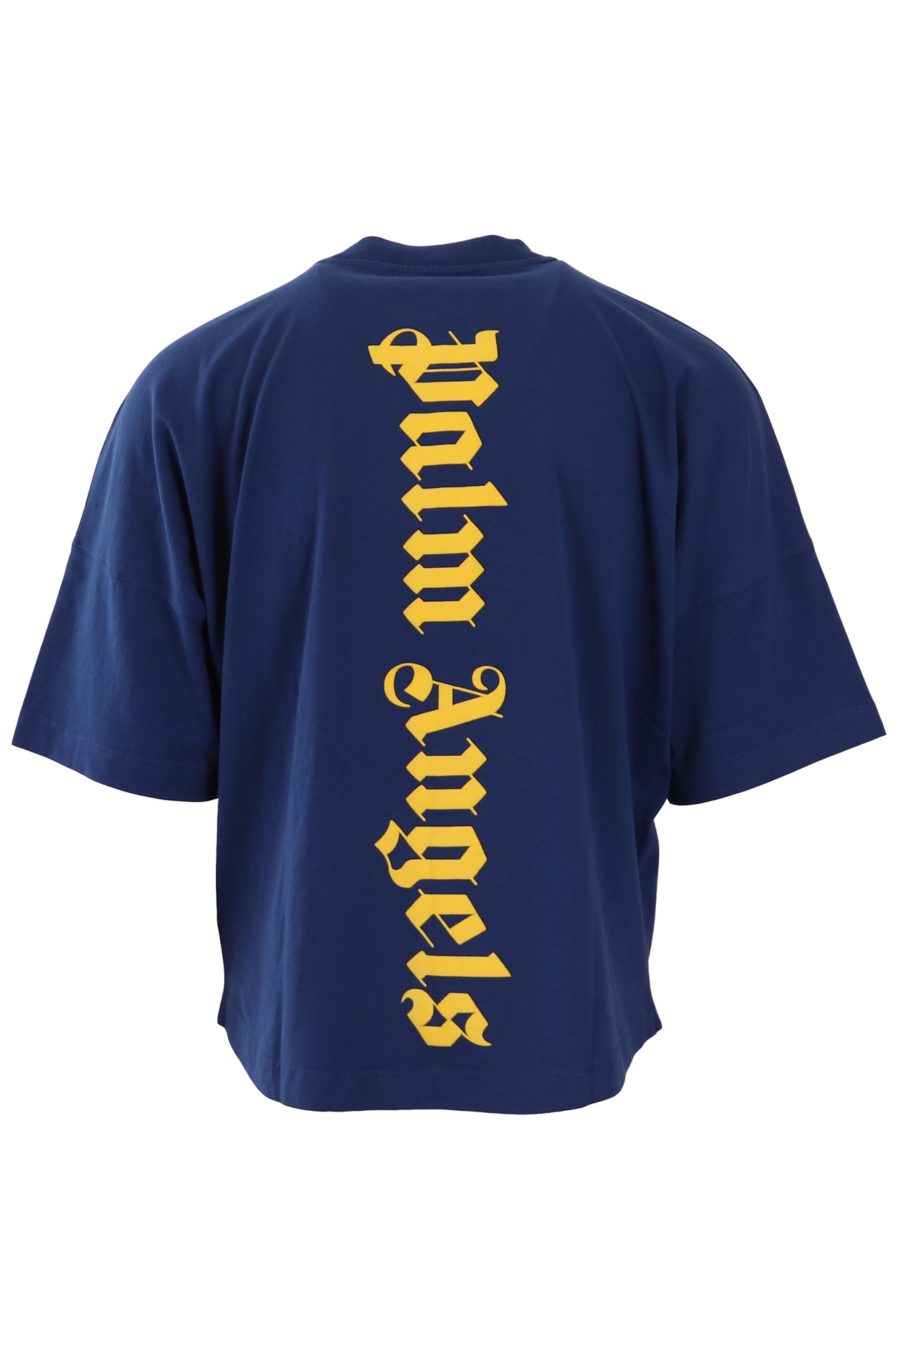 T-Shirt Palm Angels blau mit gelbem vertikalen Logo - 113846a199eb7415c5e0fba74dbfd24d340e2a8d